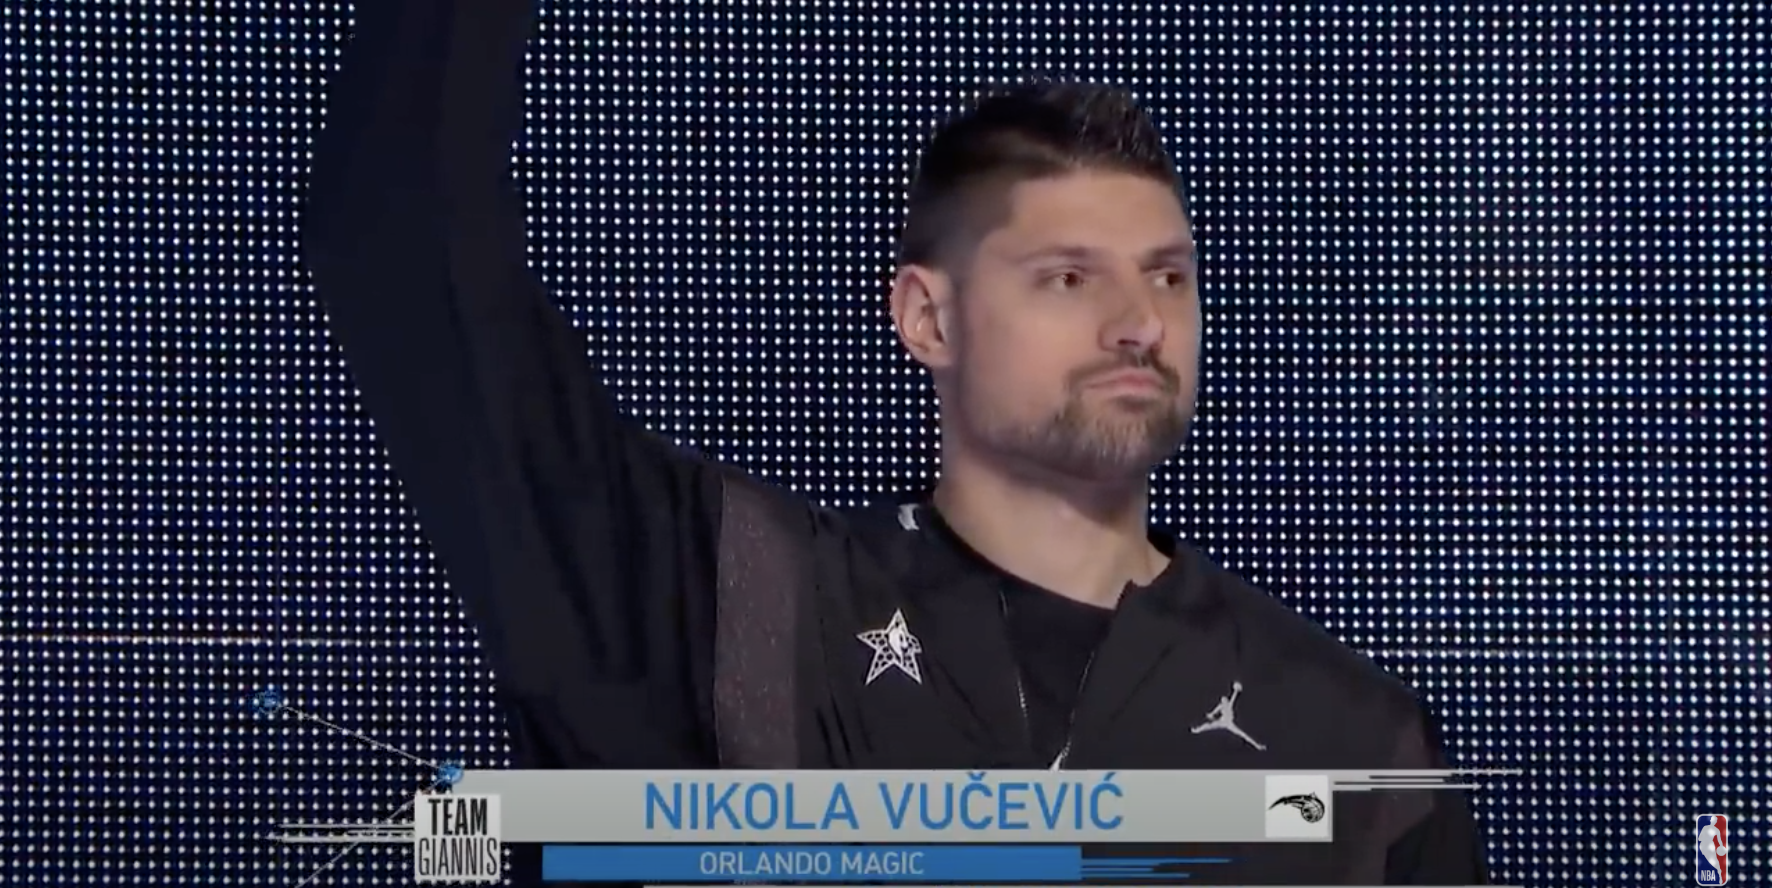 Nikola Vucevic